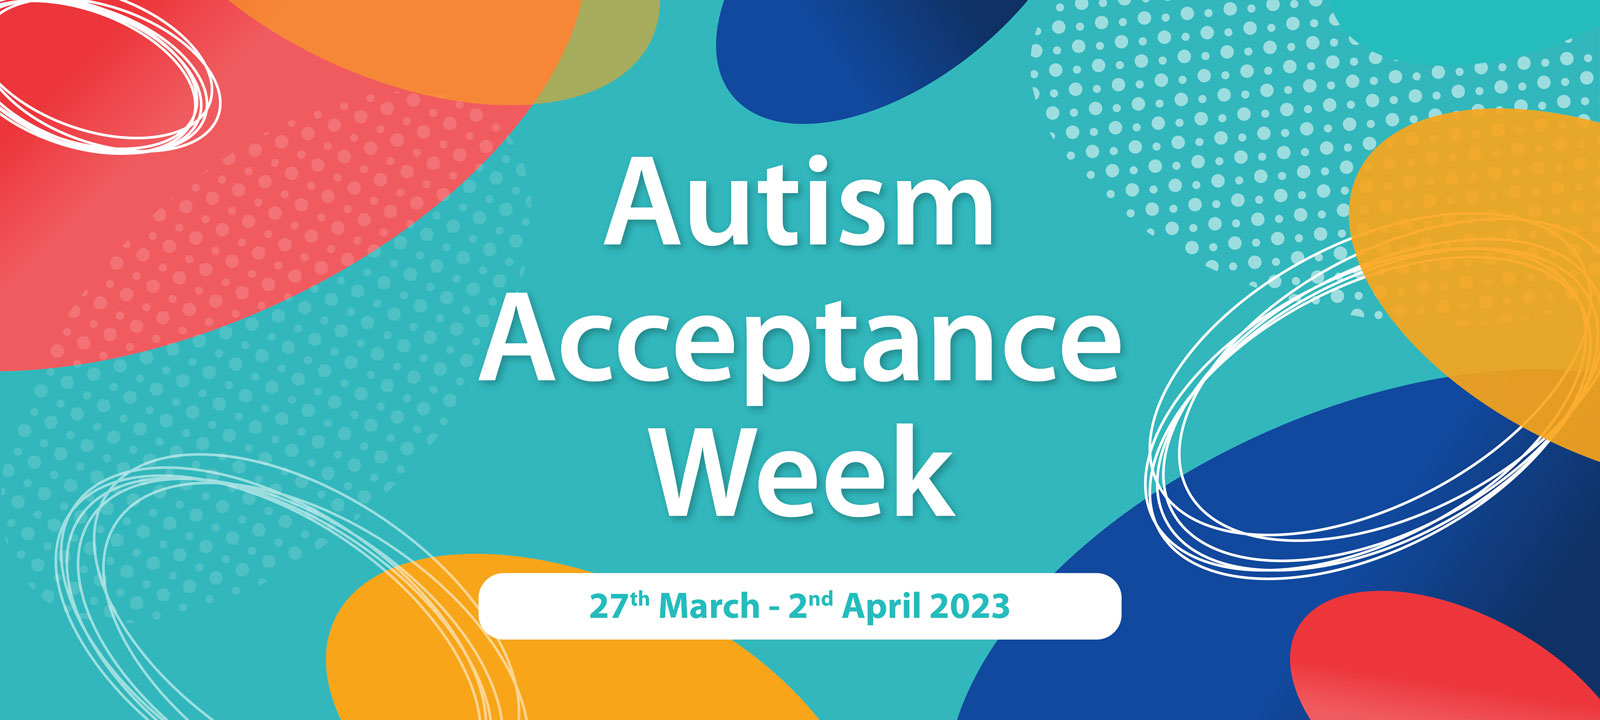 Autism Acceptance Week 2023